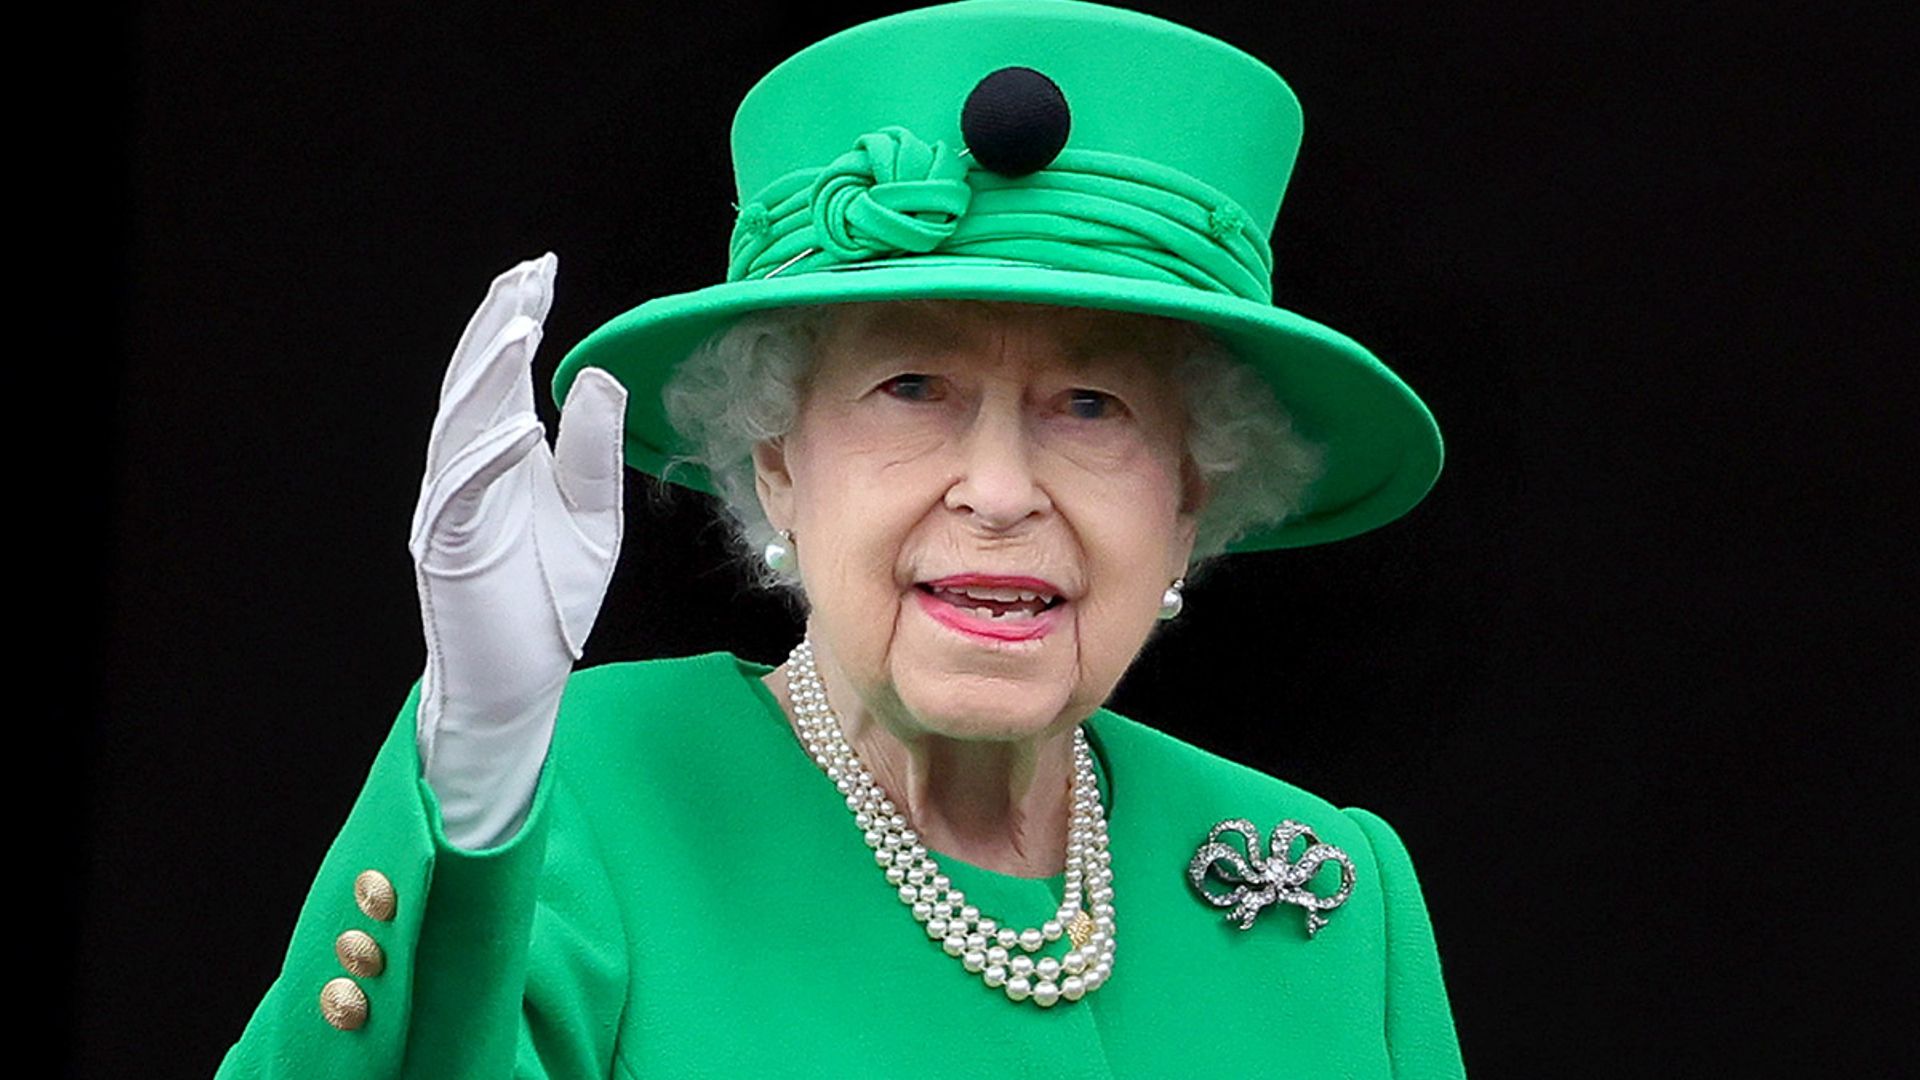 the queen waving in green jubilee